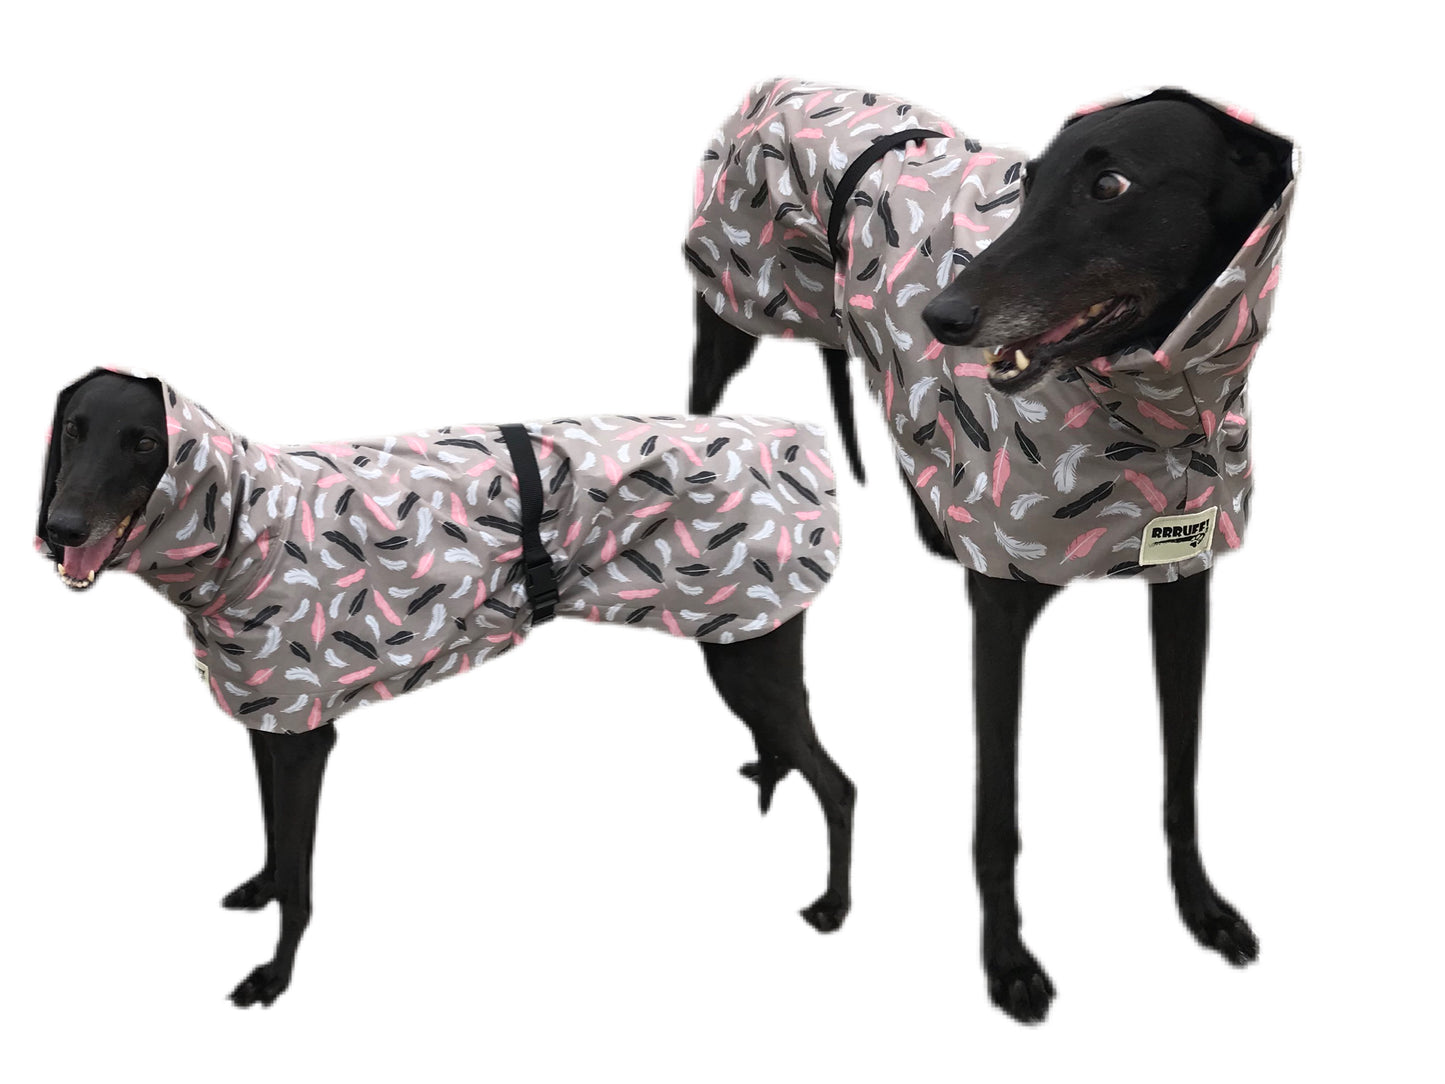 Feathers design Summer rainwear Greyhound coat deluxe style, ultra lightweight, hand washable